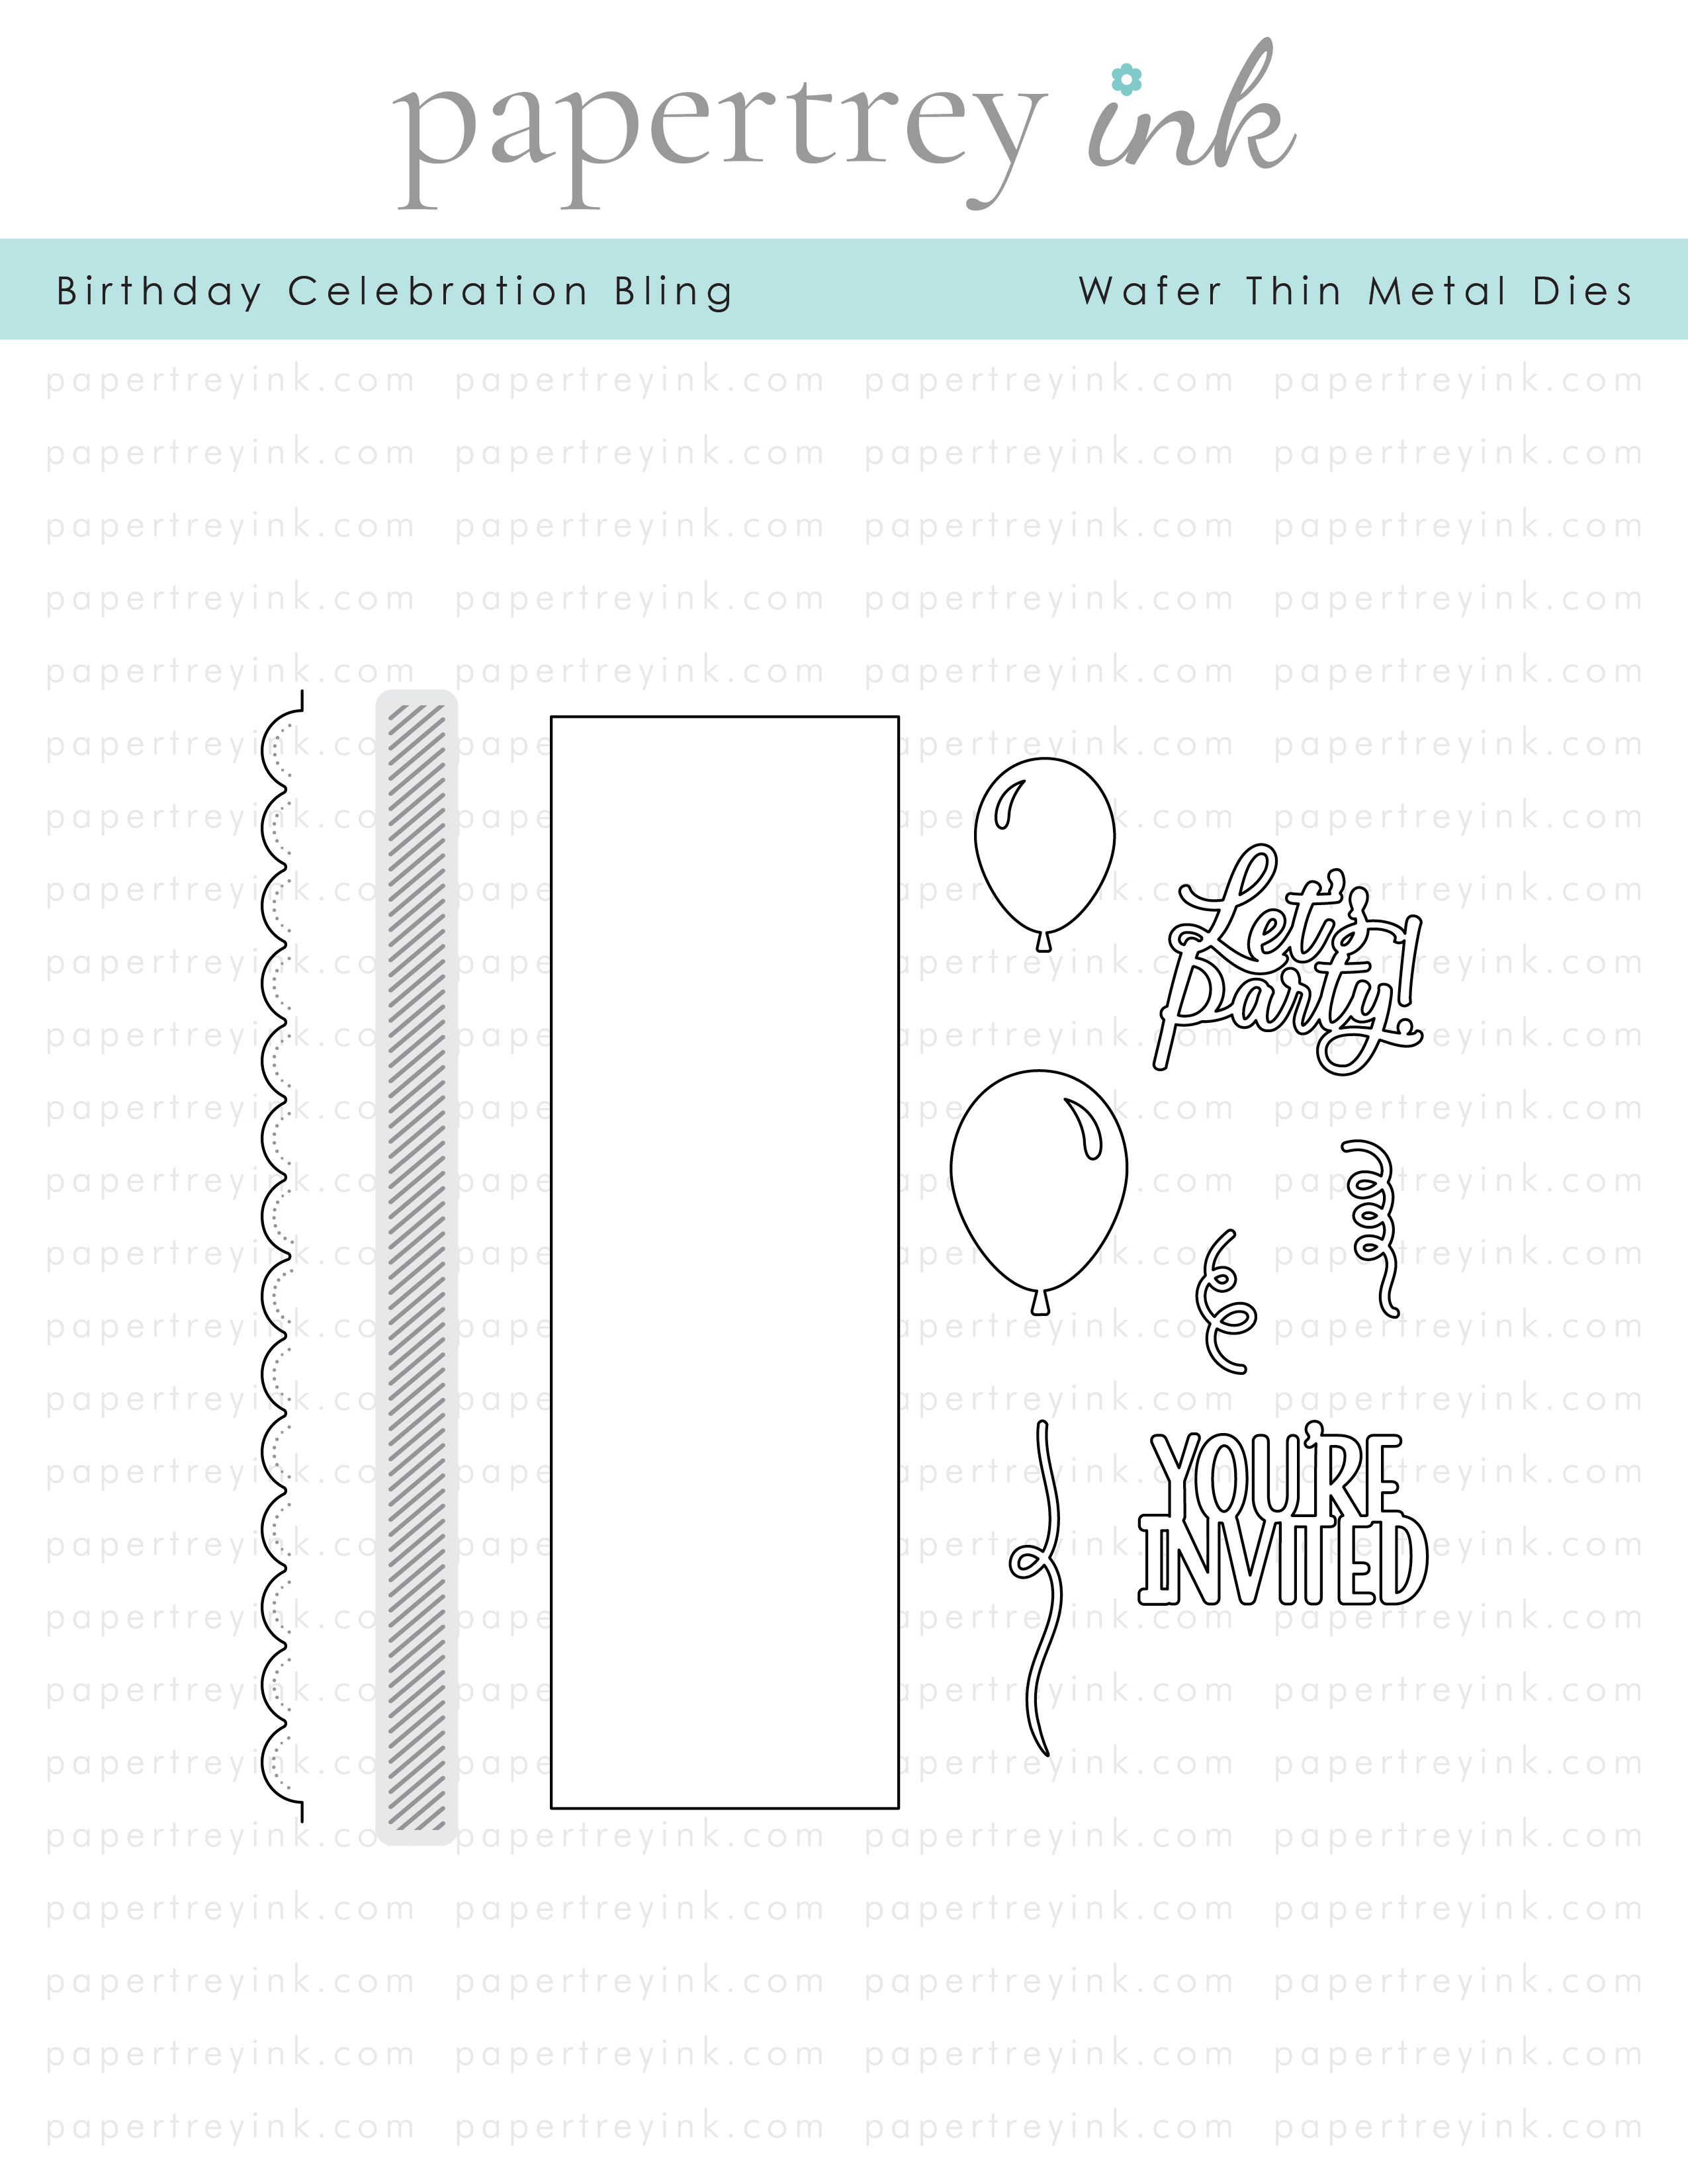 Mash-Up Birthday Stamp Set: Papertrey Ink